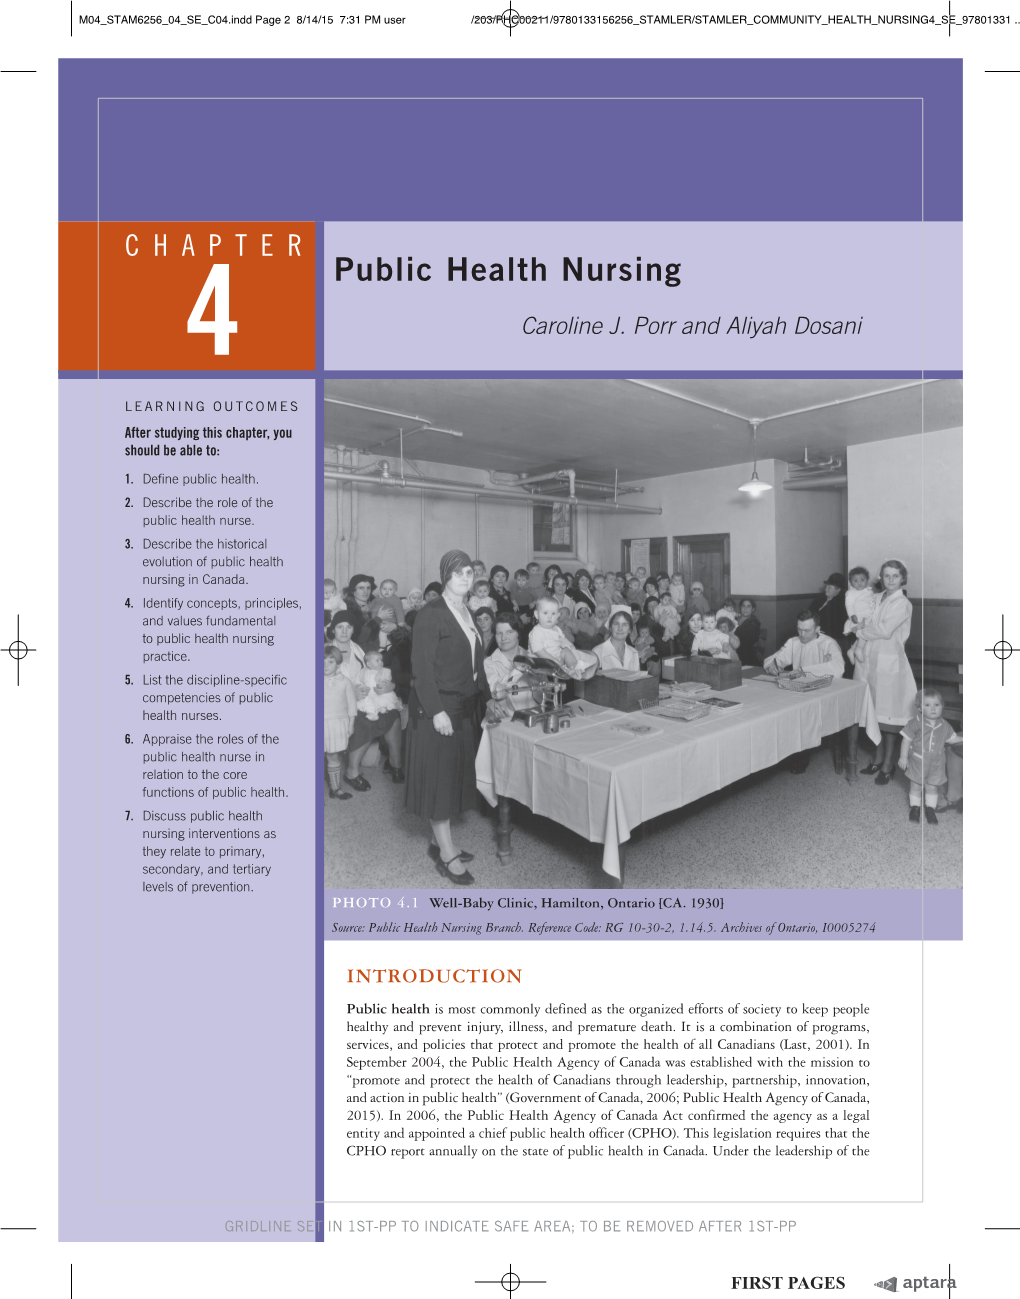 Public Health Nursing 4 Caroline J